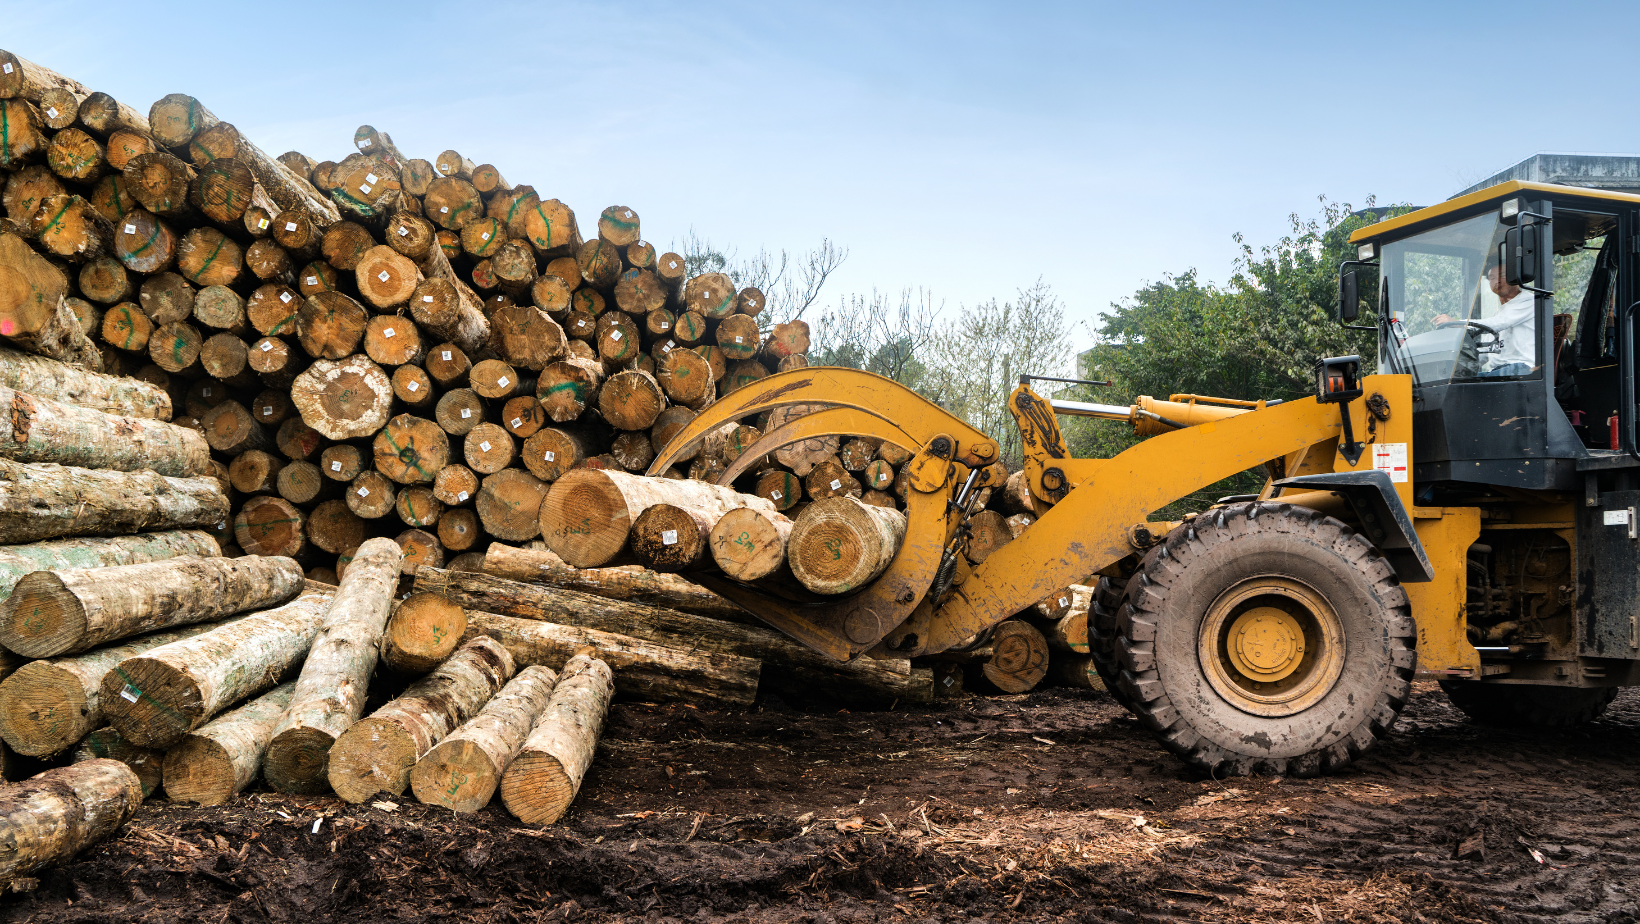 Stacked Wood Logs [IMAGE]  EurekAlert! Science News Releases